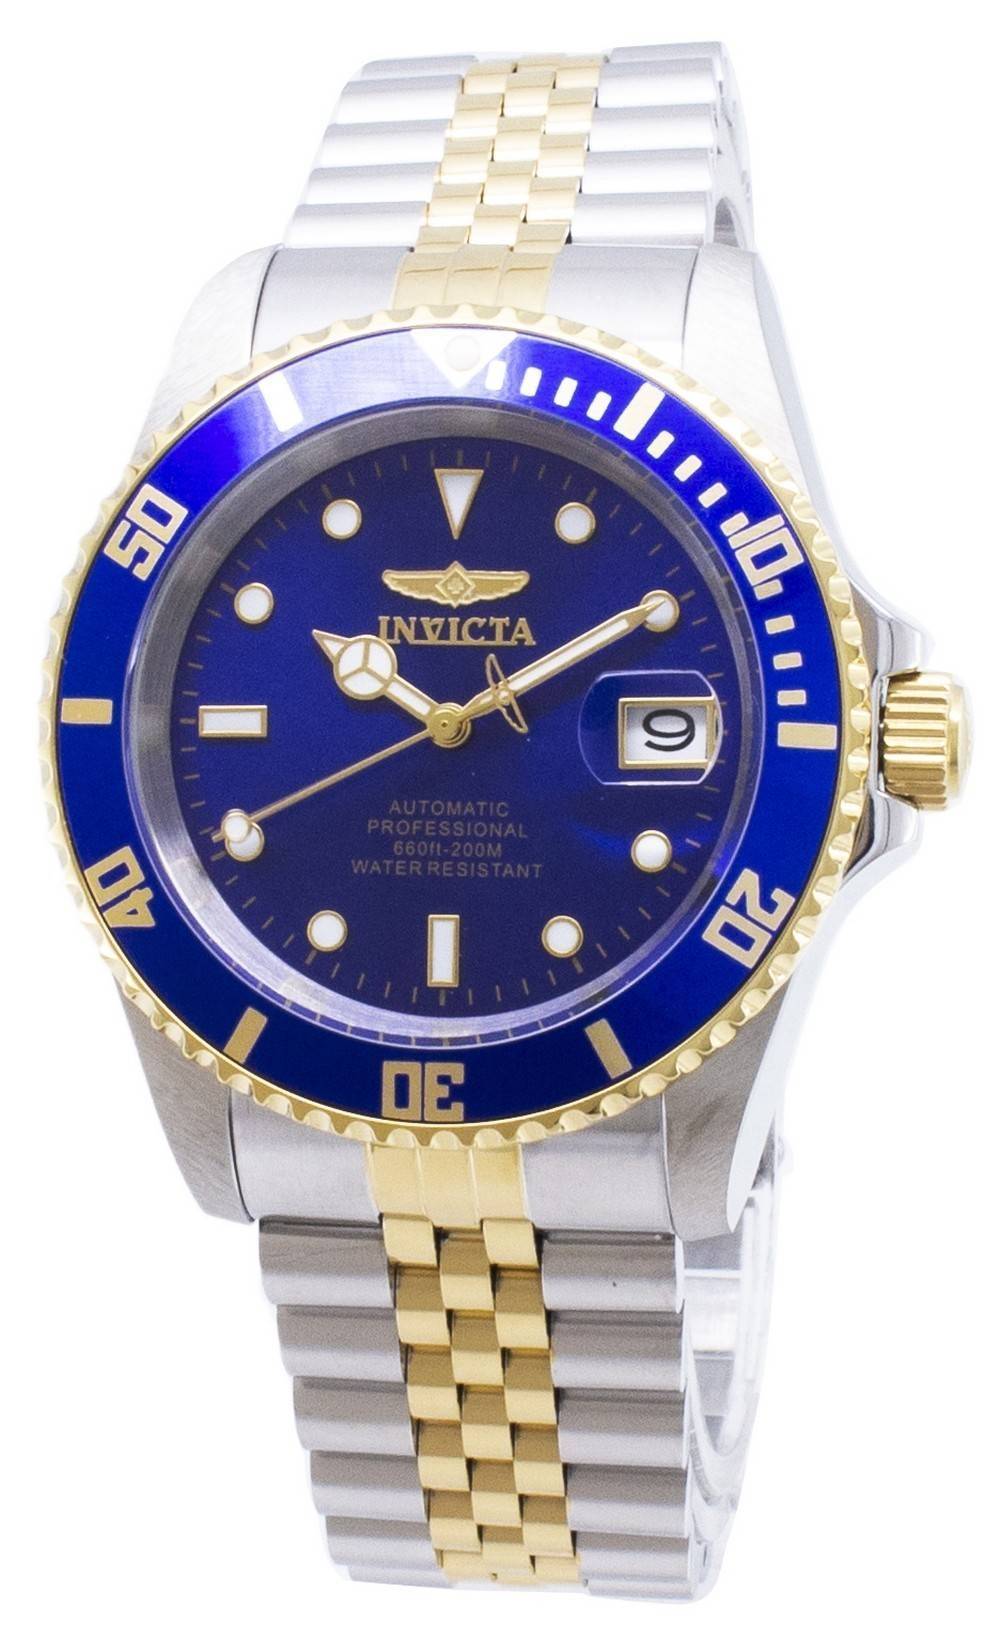 Invicta Watches | Invicta Diver & Automatic Watches for Men & Women